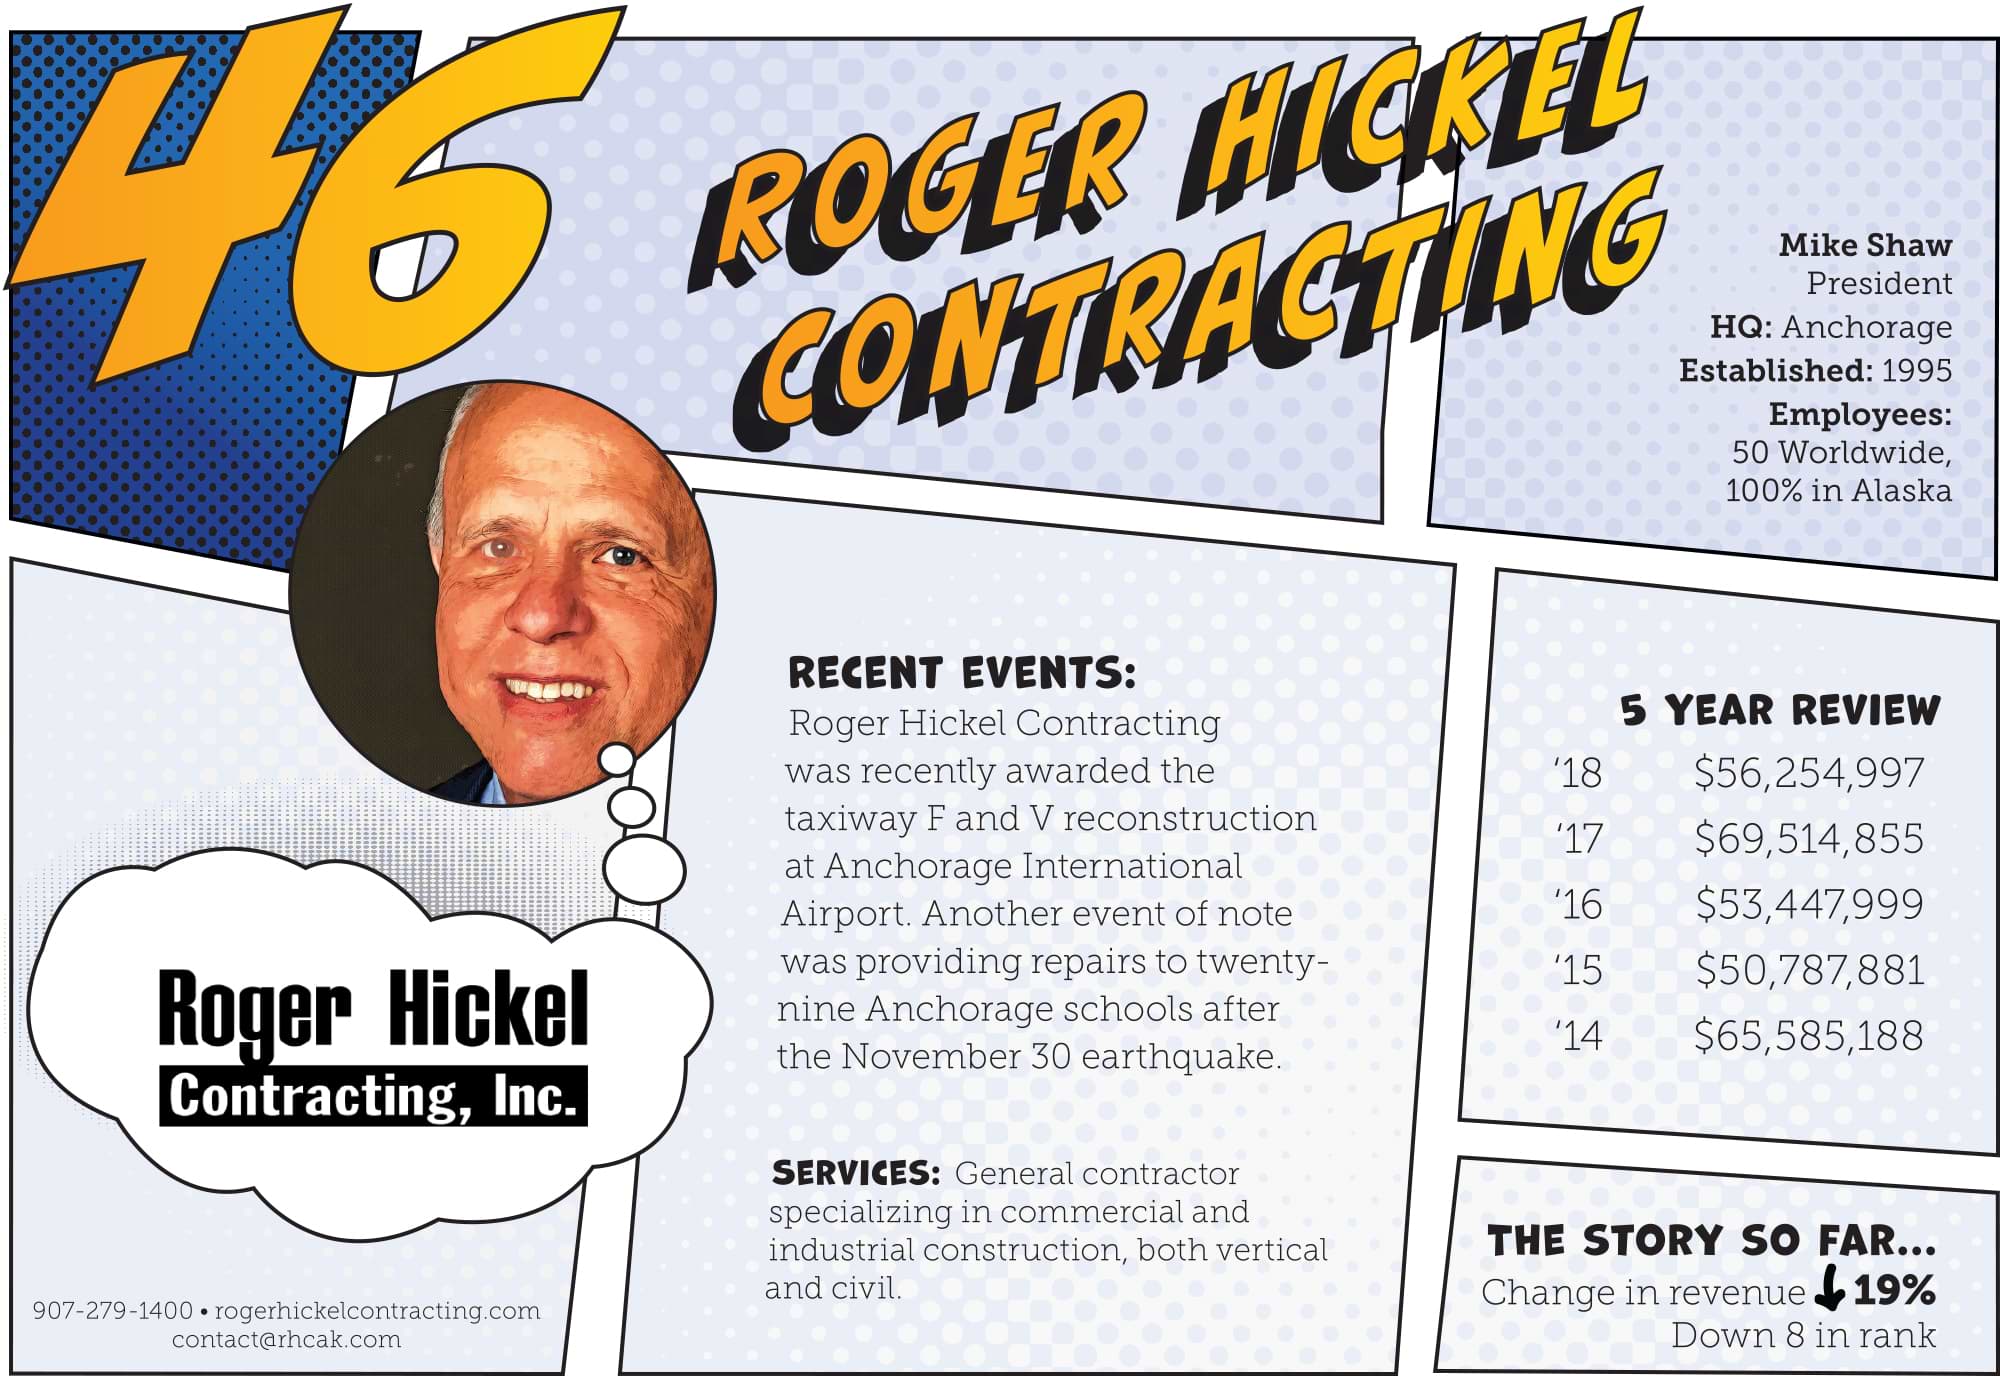 Roger Hickel Contracting